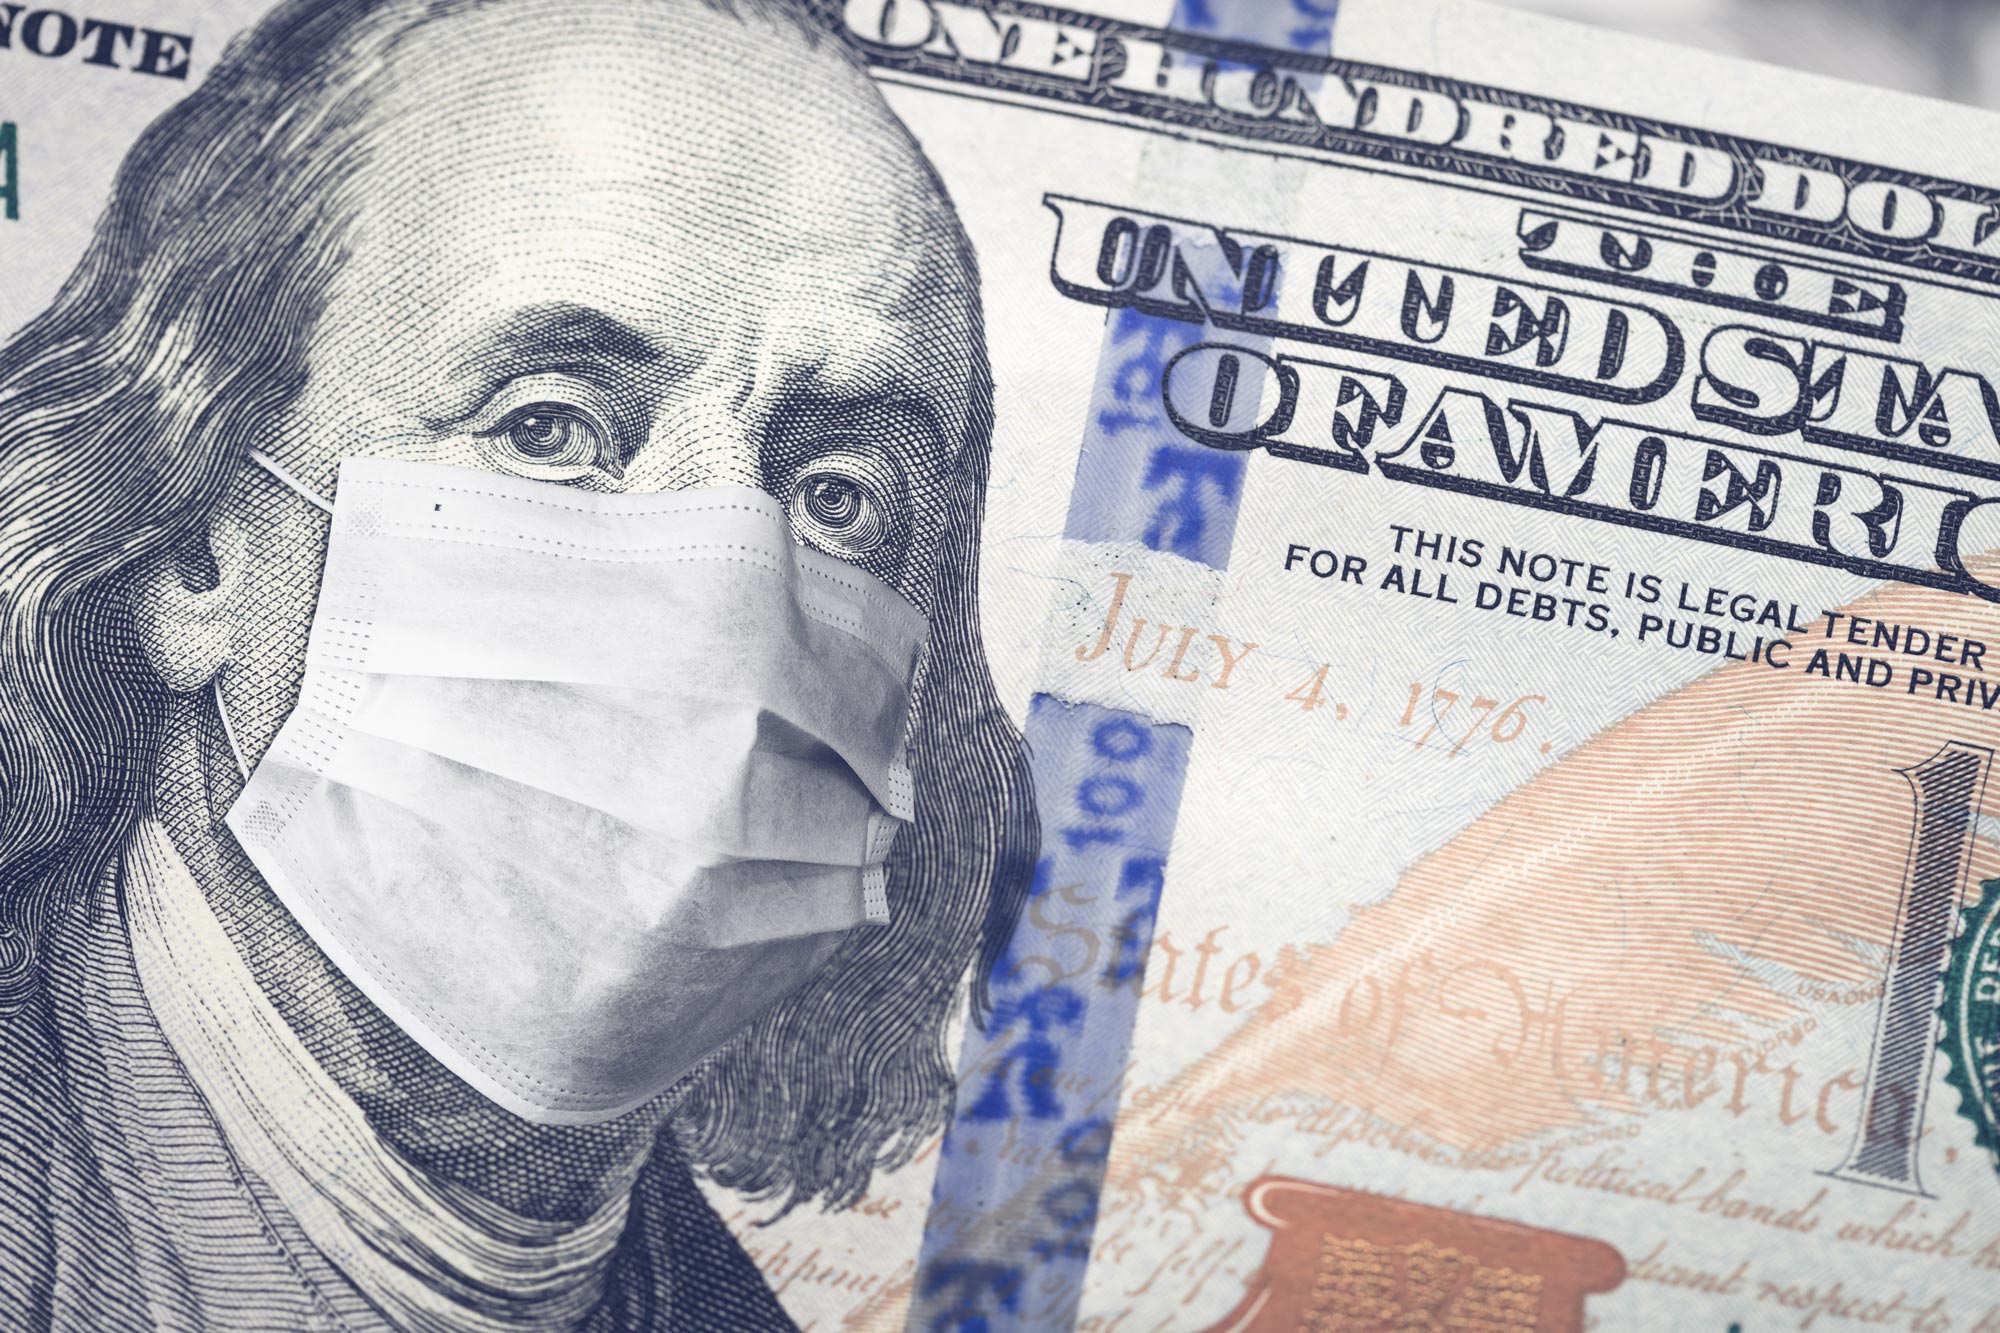 Benjamin Franklin on the 100 dollar bill wearing a mask